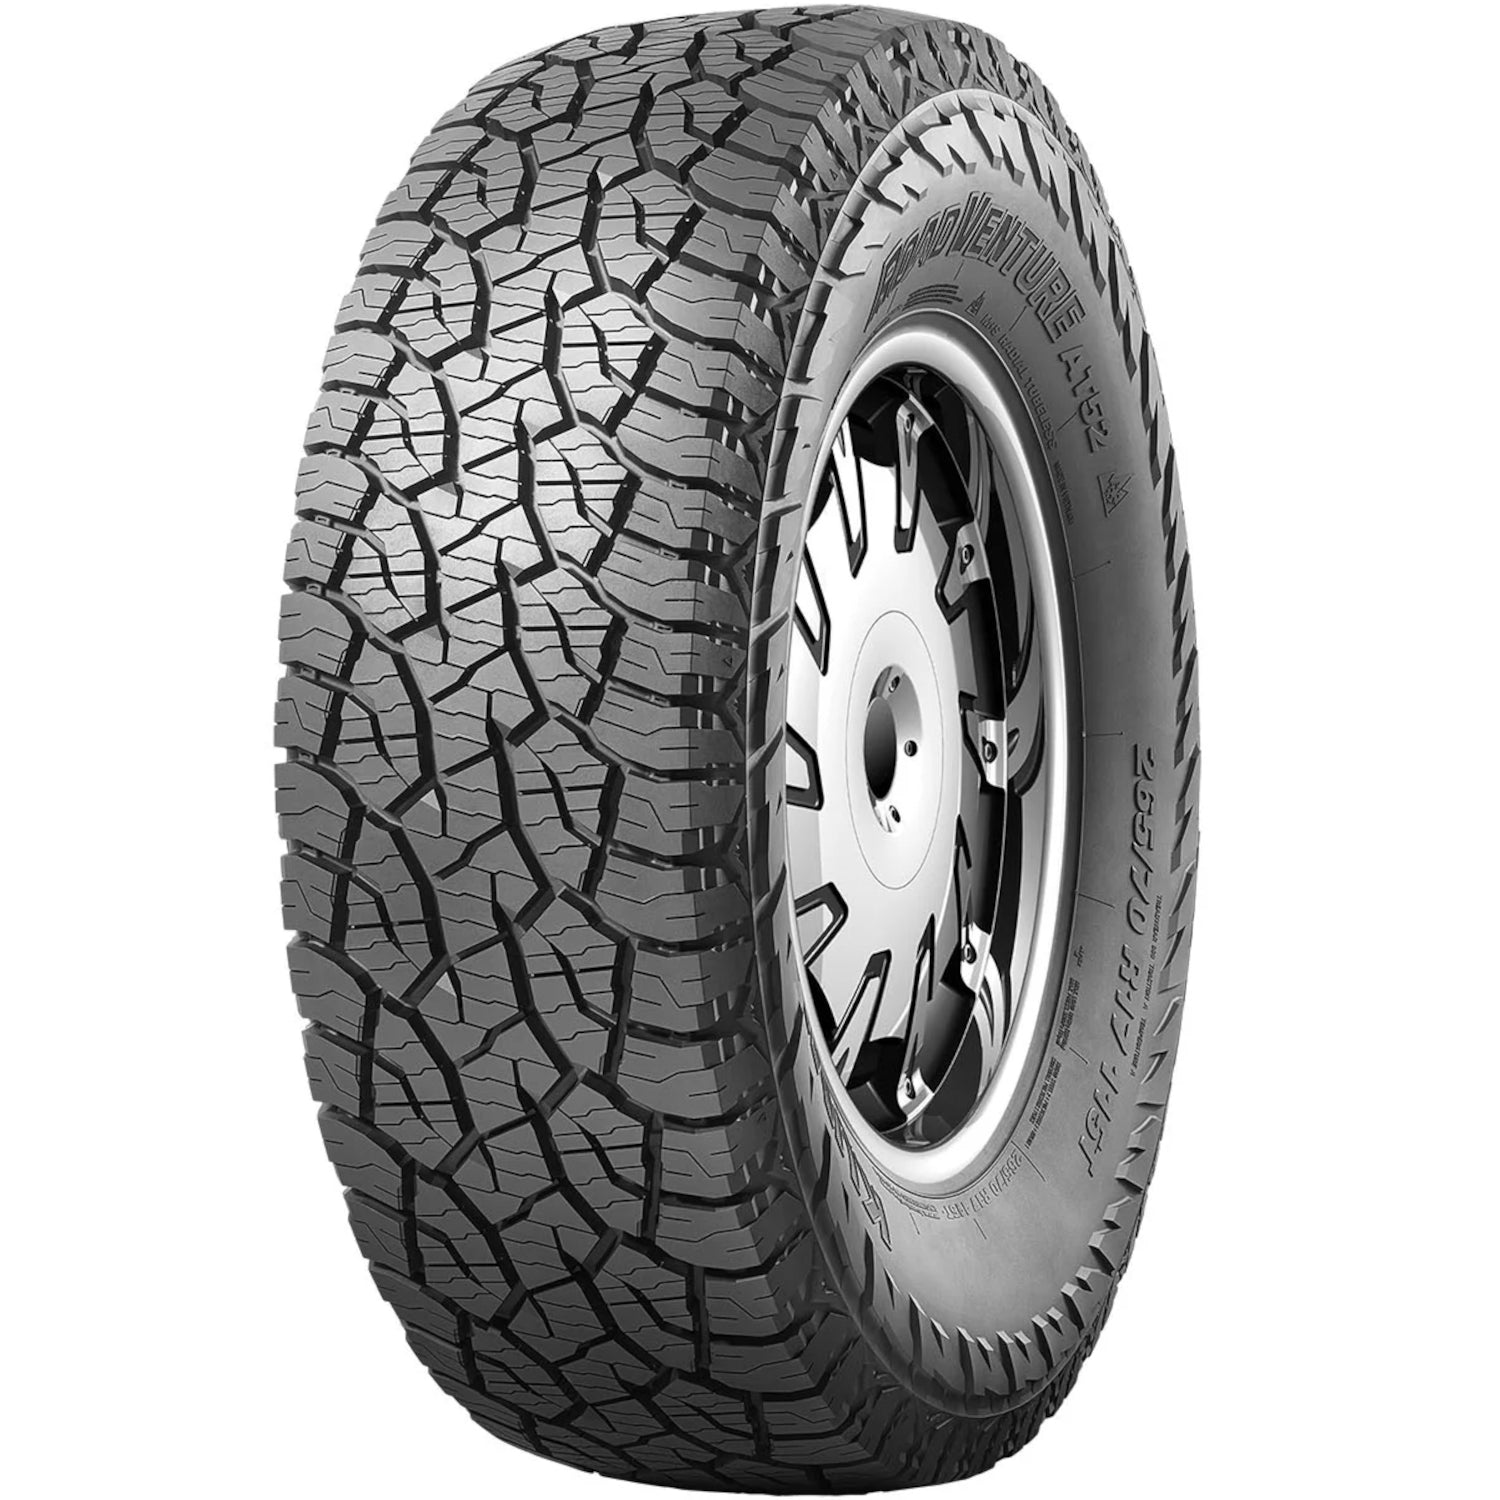 KUMHO ROAD VENTURE AT52 30X9.5R15 Tires